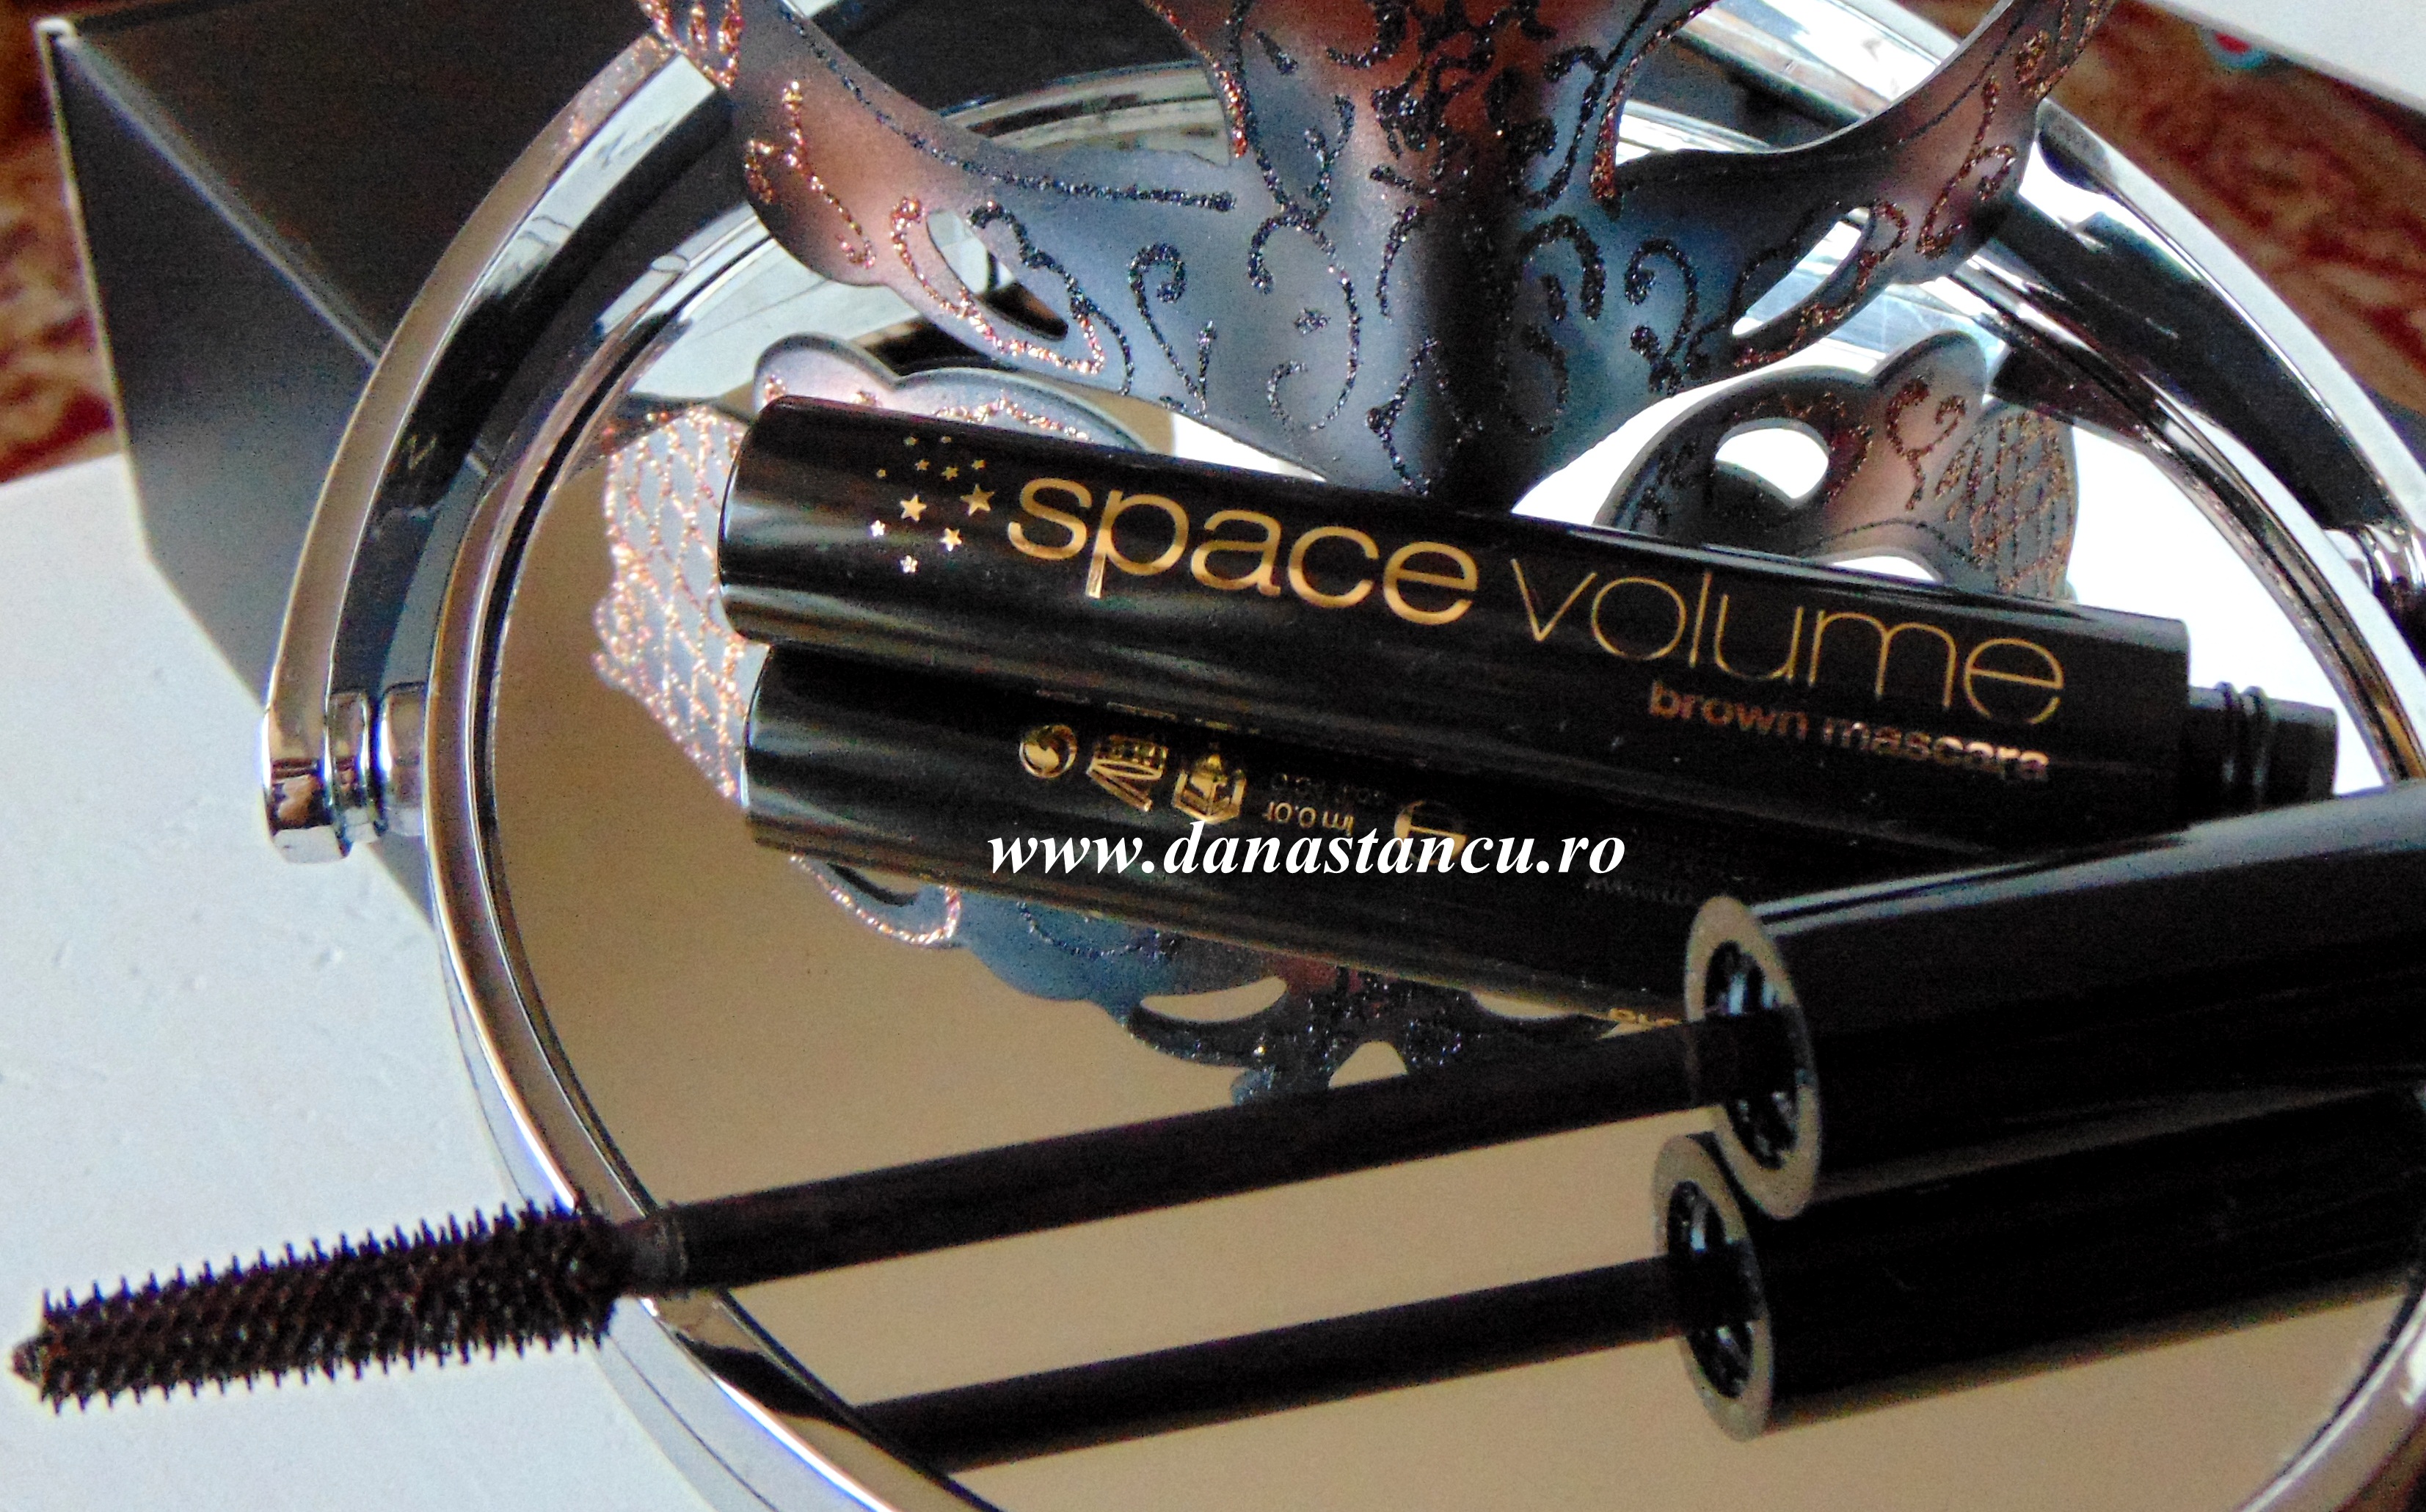 space volume mascara